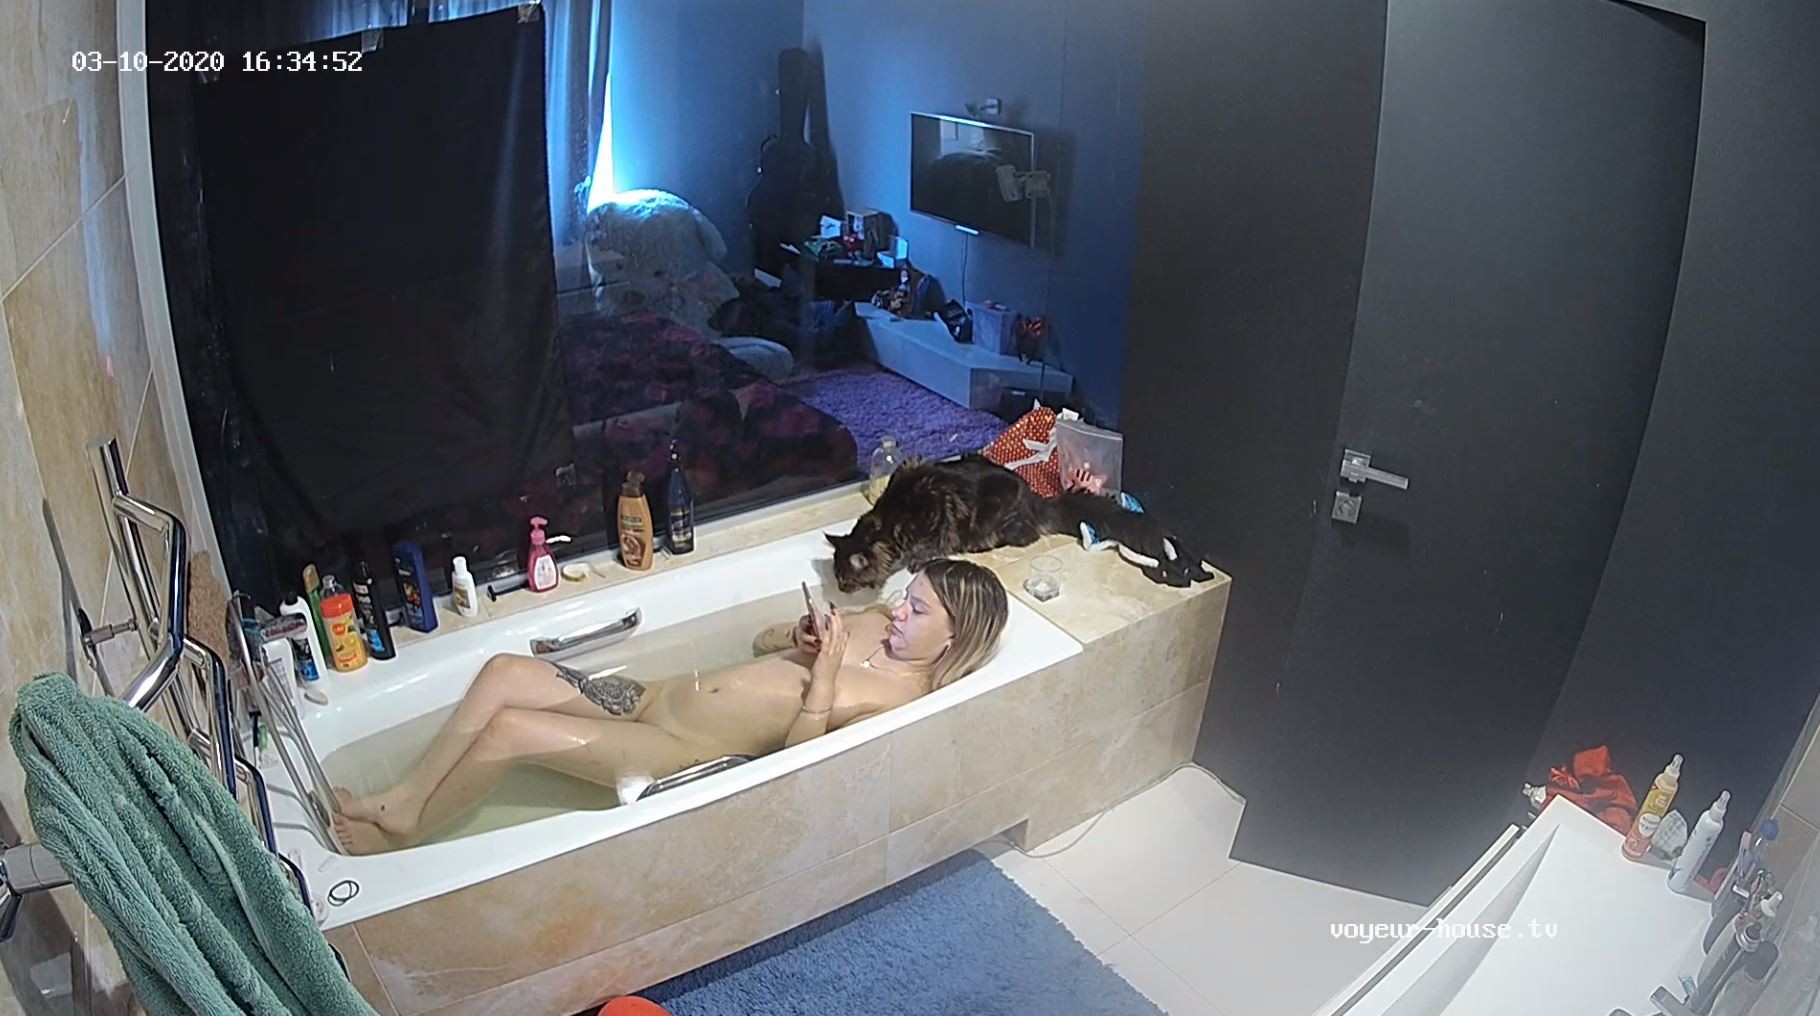 Melissa long bath with Jax watching her, Mar10